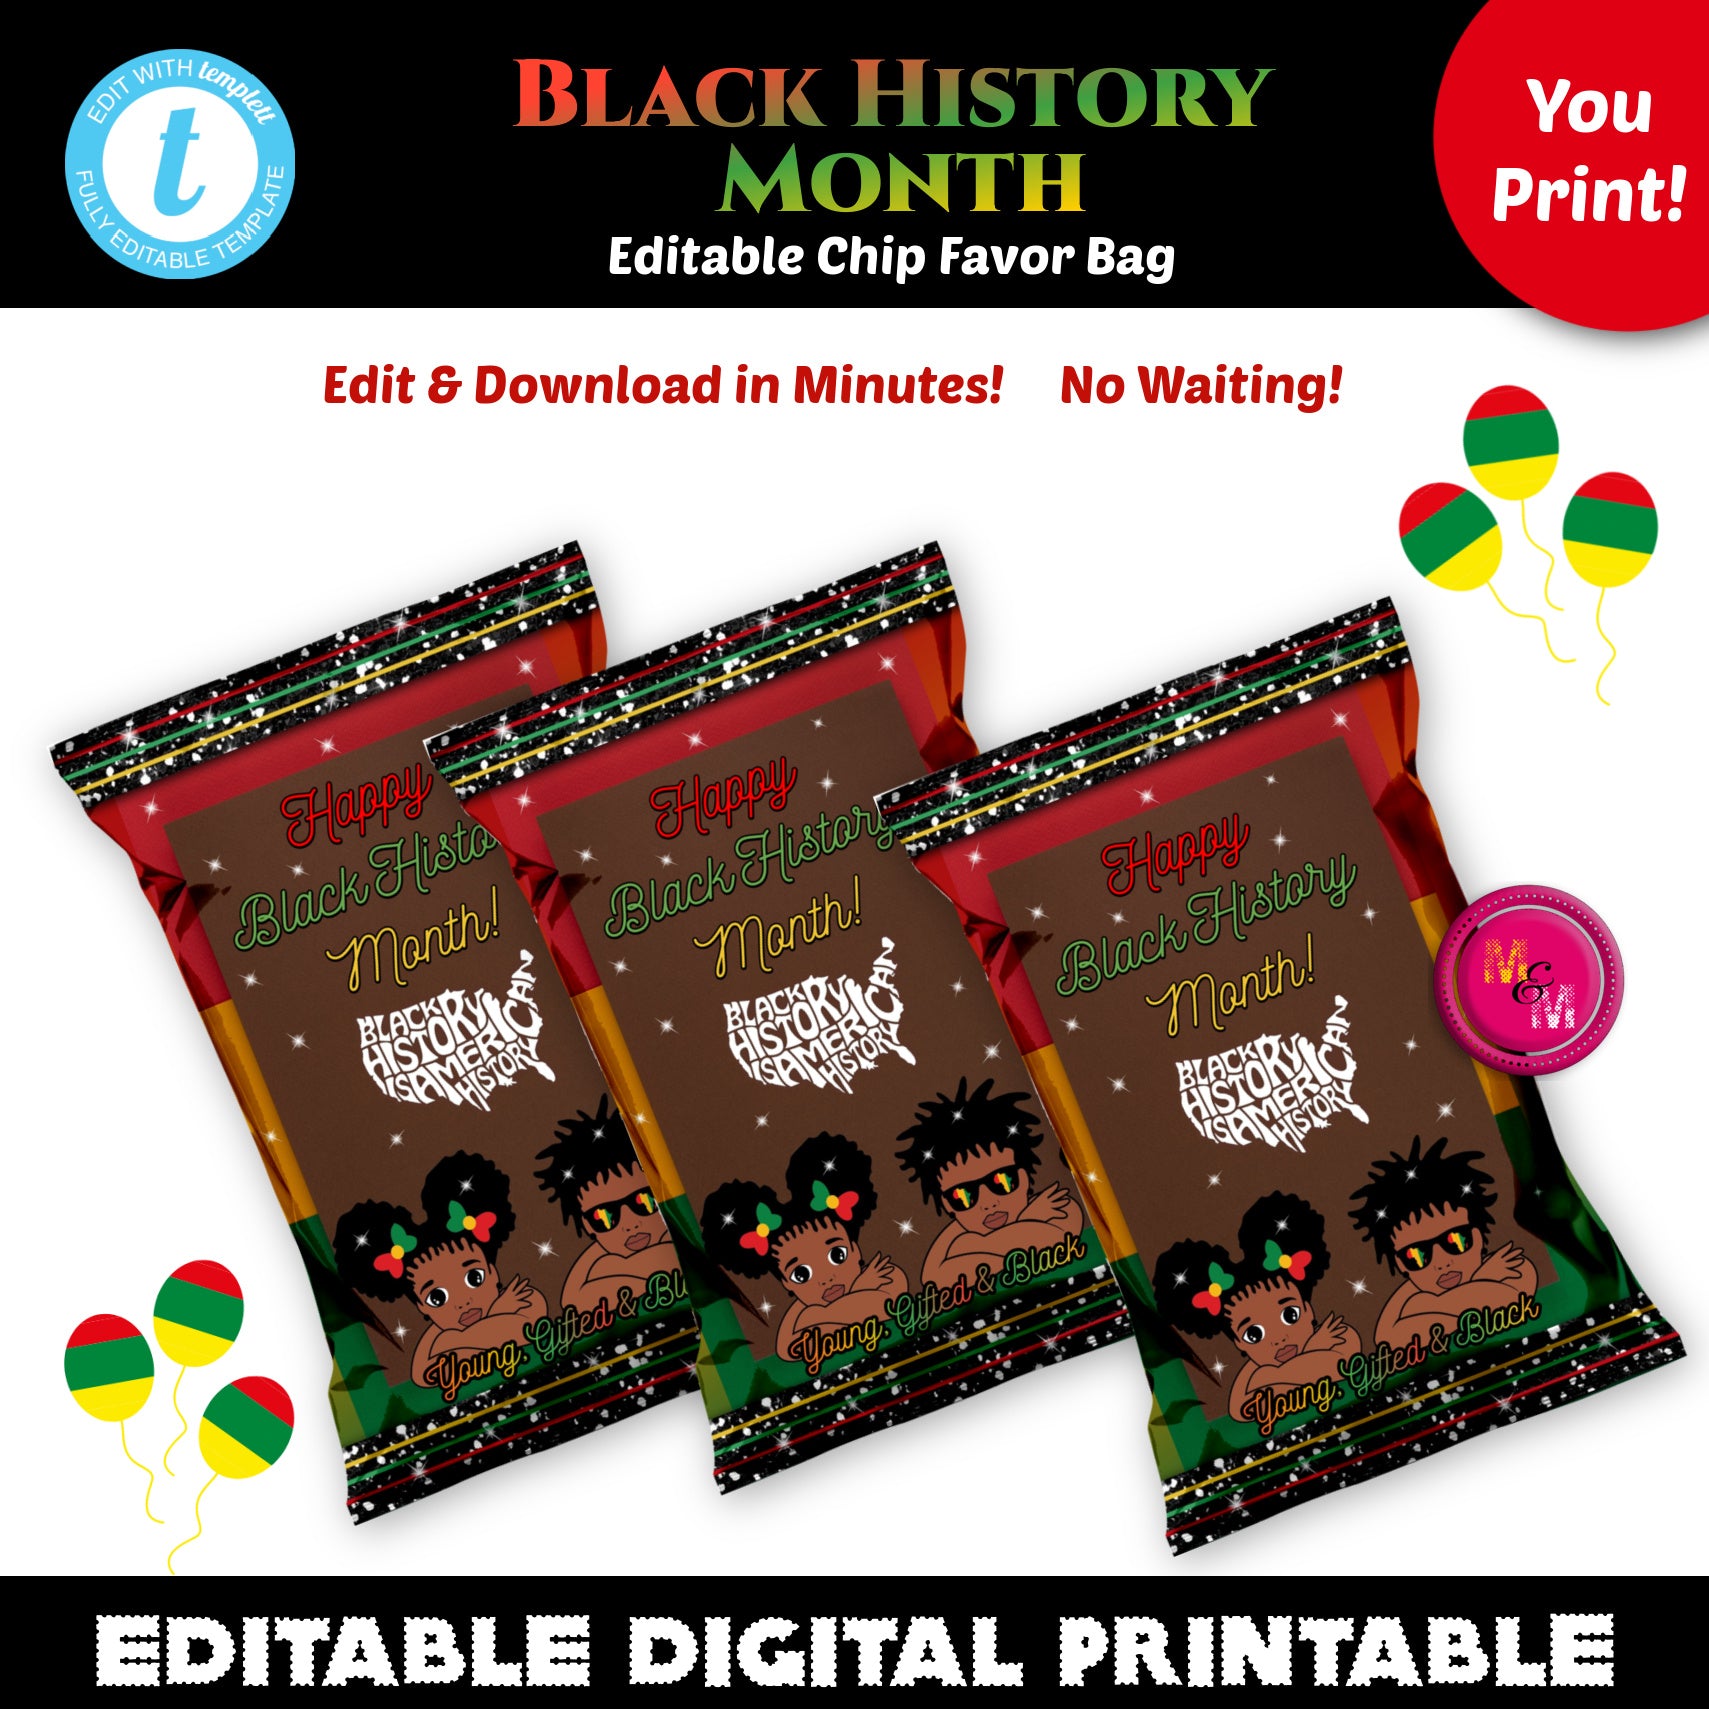 Editable Black History Month Chip Bag, Black History Month Party Favor